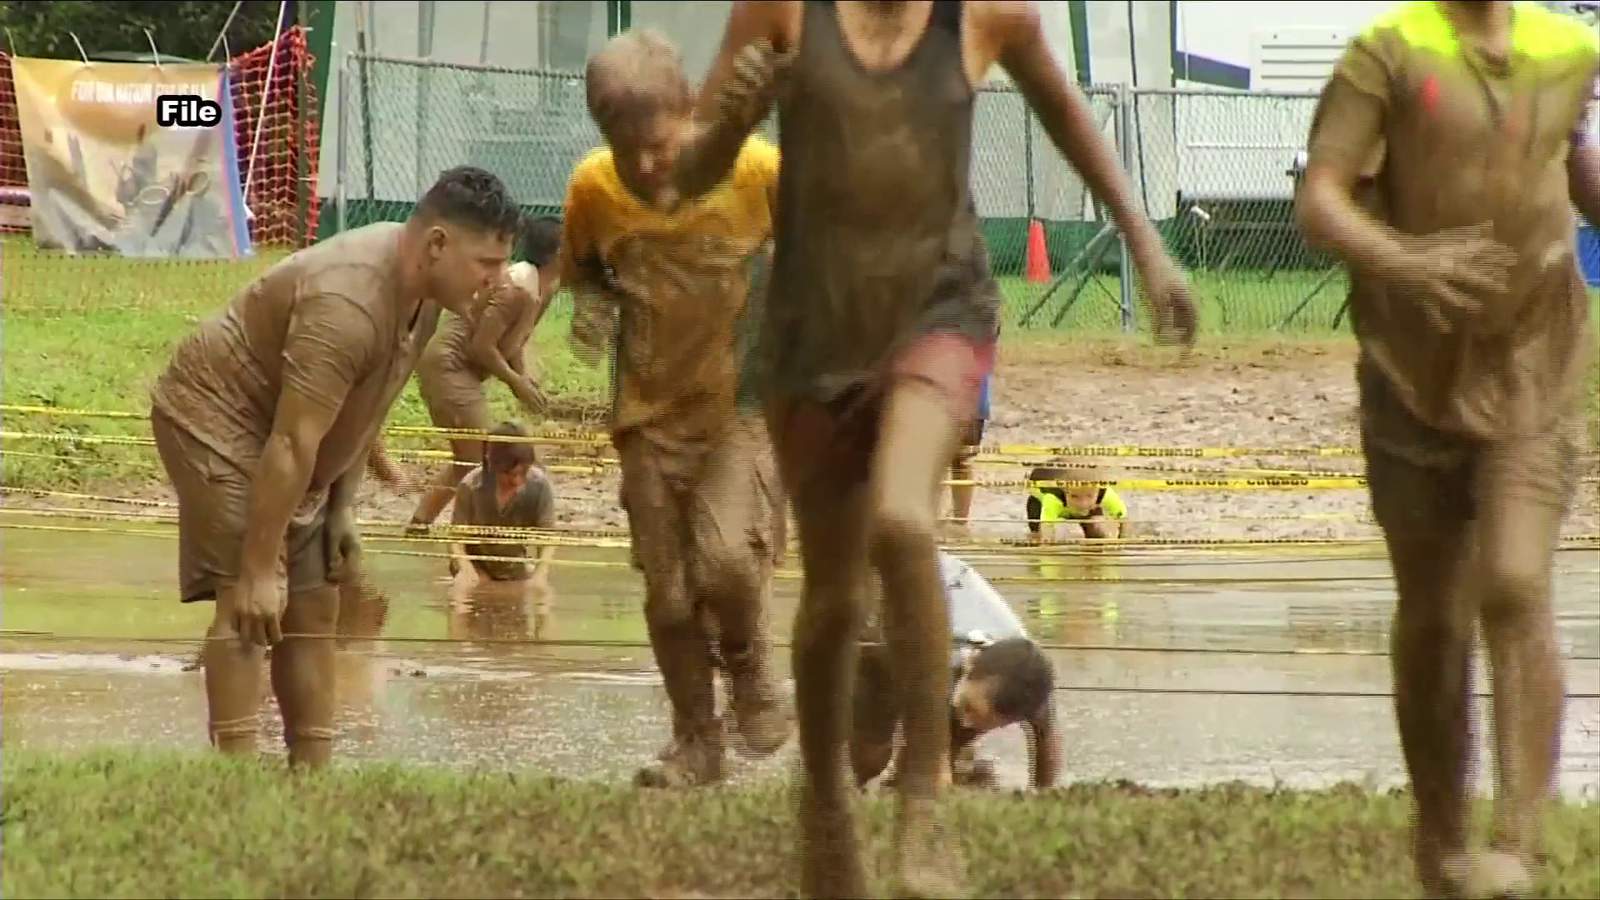 25 Years Later: Roanoke Marine Mud Run fundraiser goes on amid pandemic